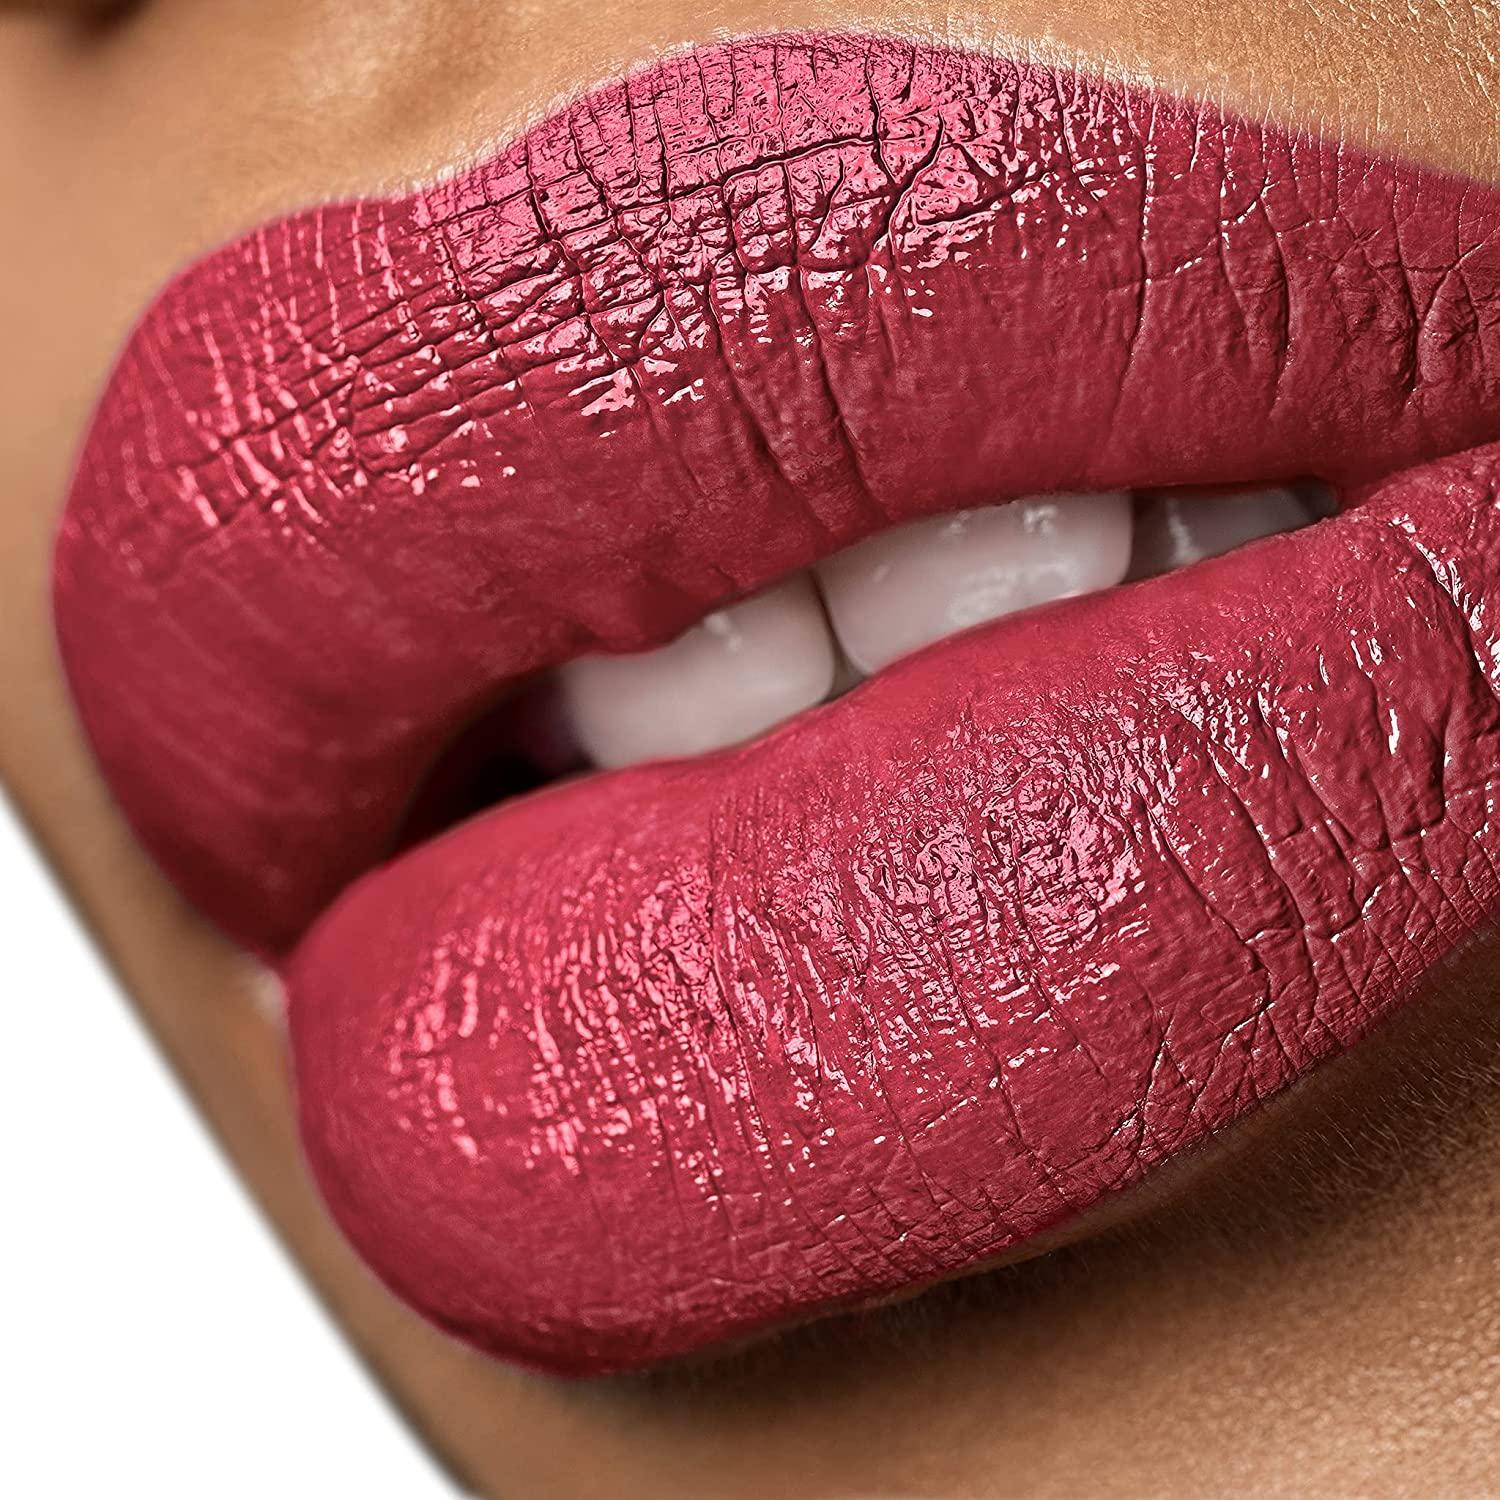 Liquid Pigment Lip Gloss base check customers pics out